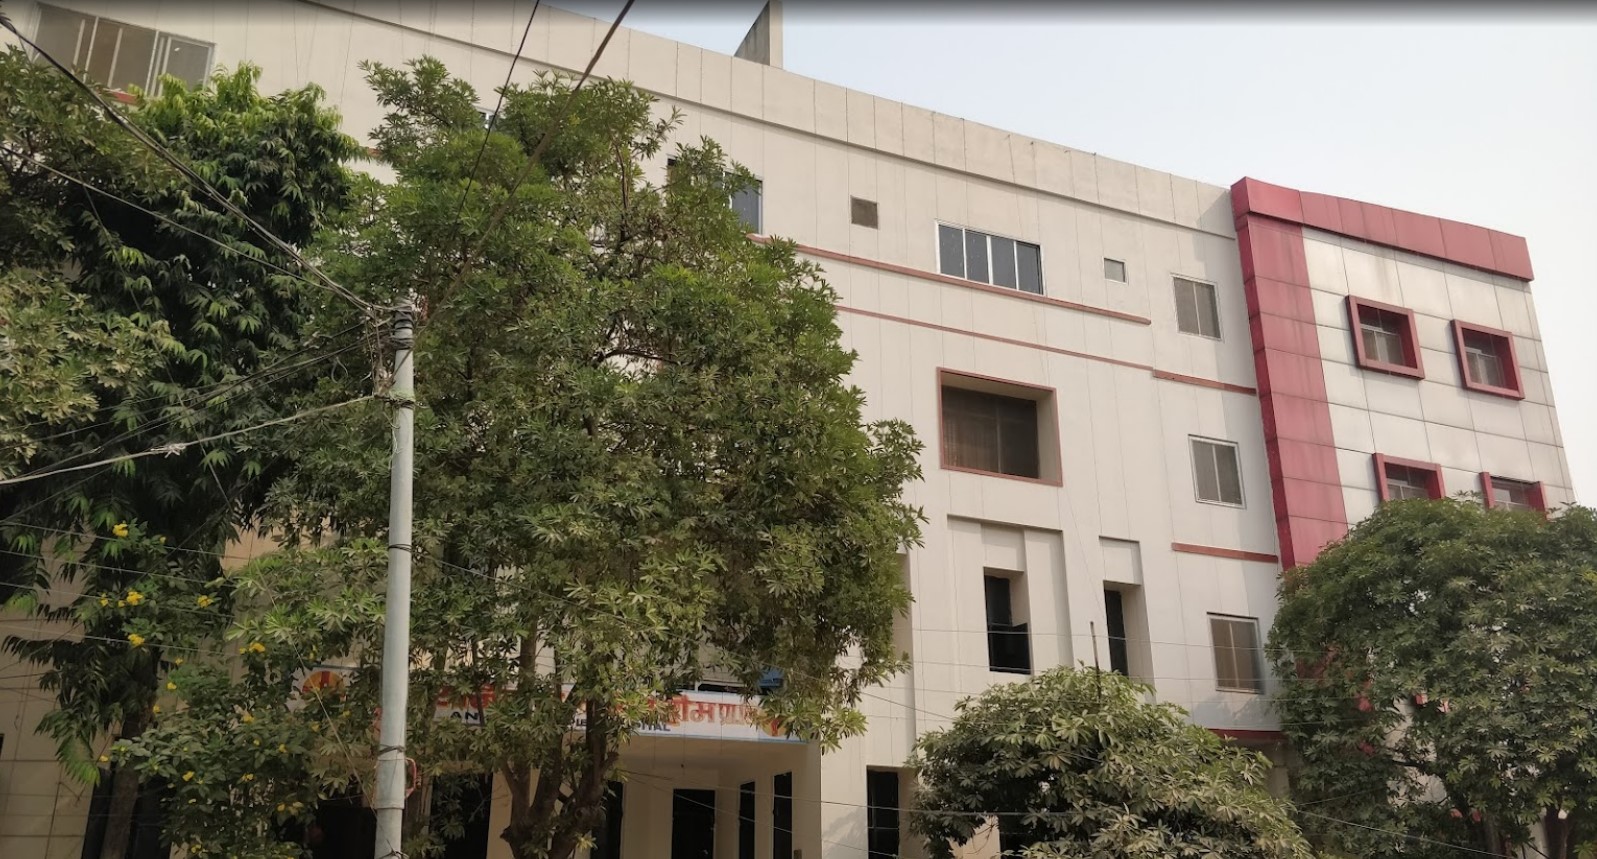 Shiv Surgical Nursing Home Ltd